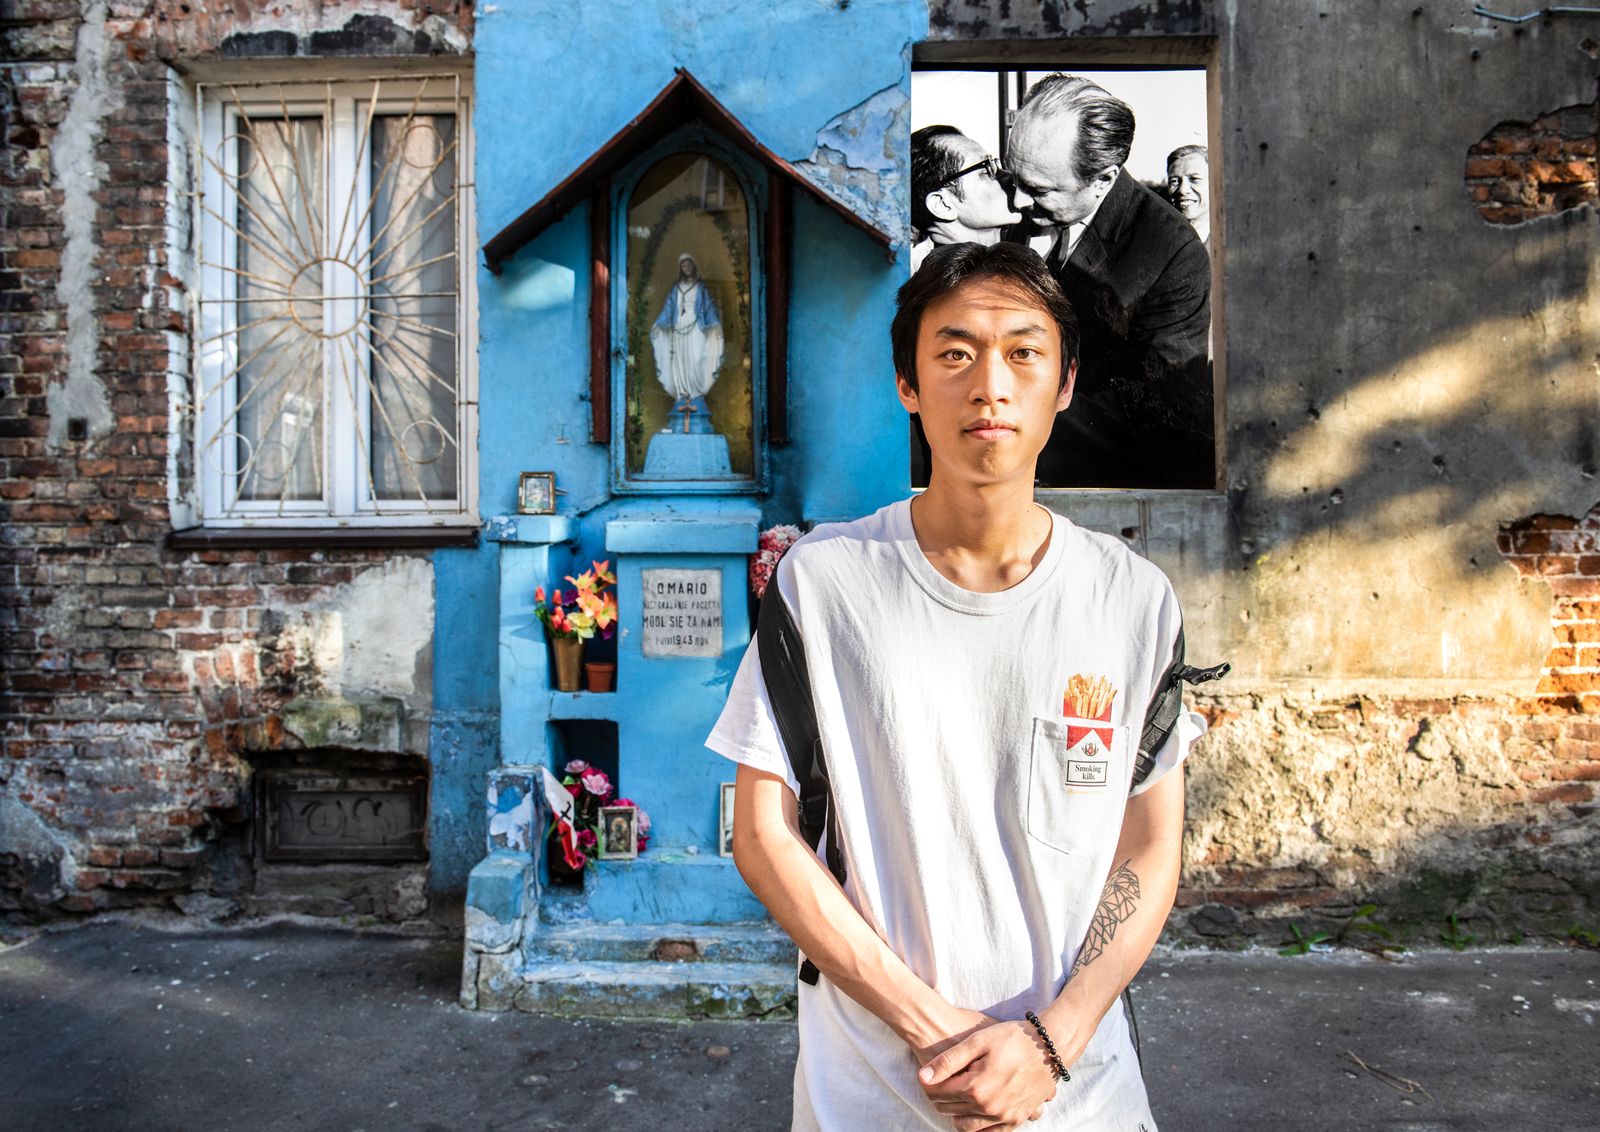 © Zula Rabikowska - Image from the Ba Lan: The Story of the Vietnamese Diaspora in Poland photography project